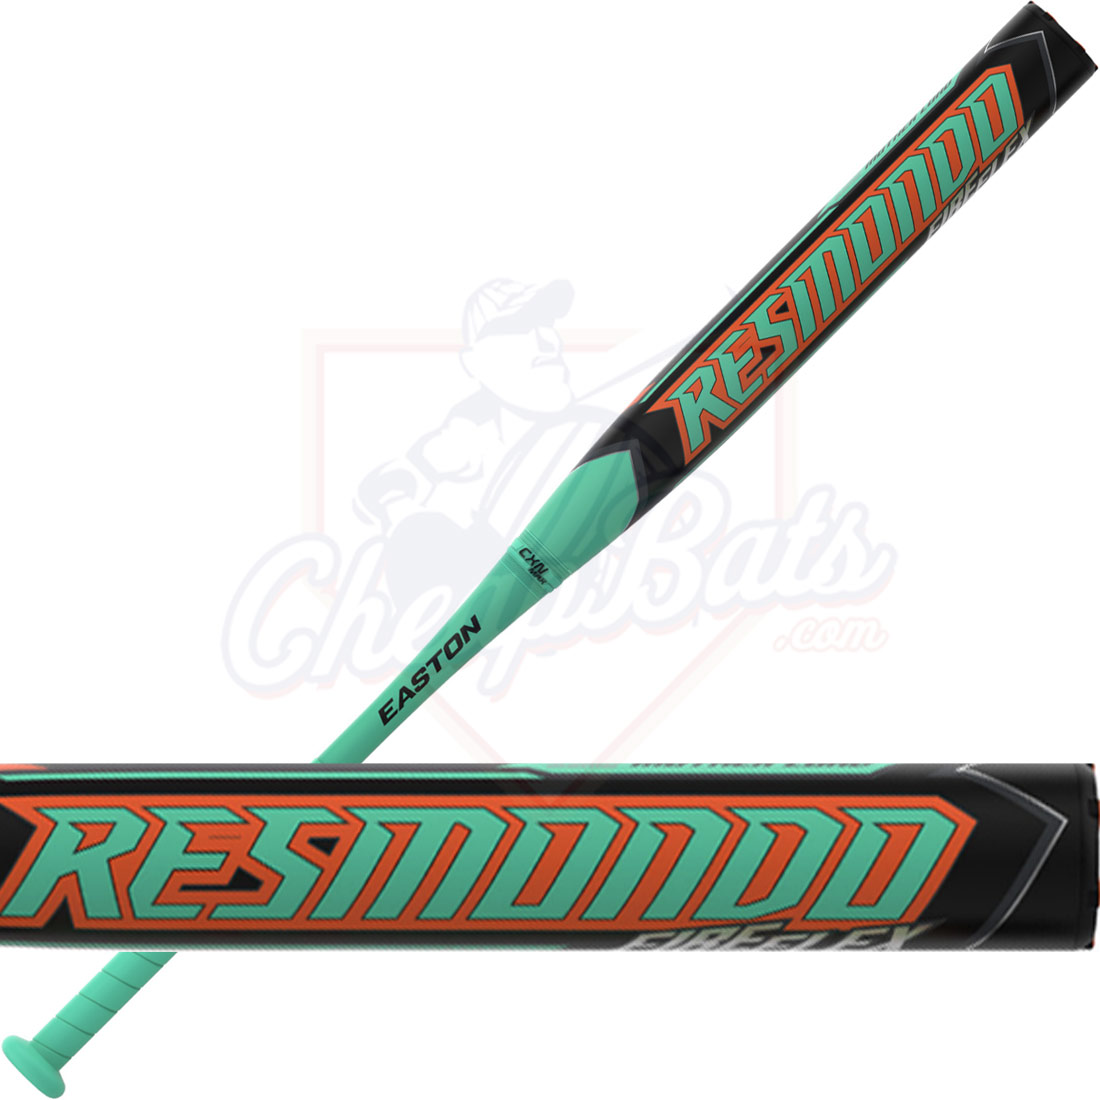 2022 Easton Resmondo Fire Flex Slowpitch Softball Bat Mother Load USSSA SP22RESX